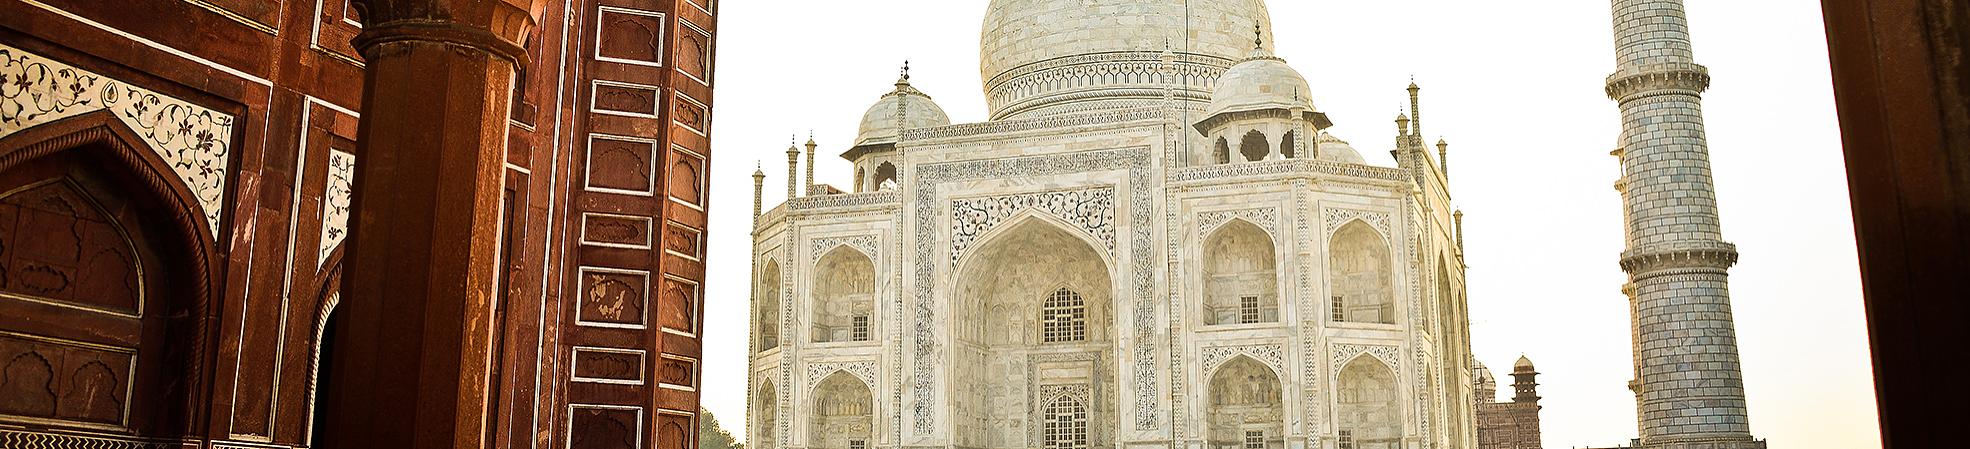 When to Visit Taj Mahal?